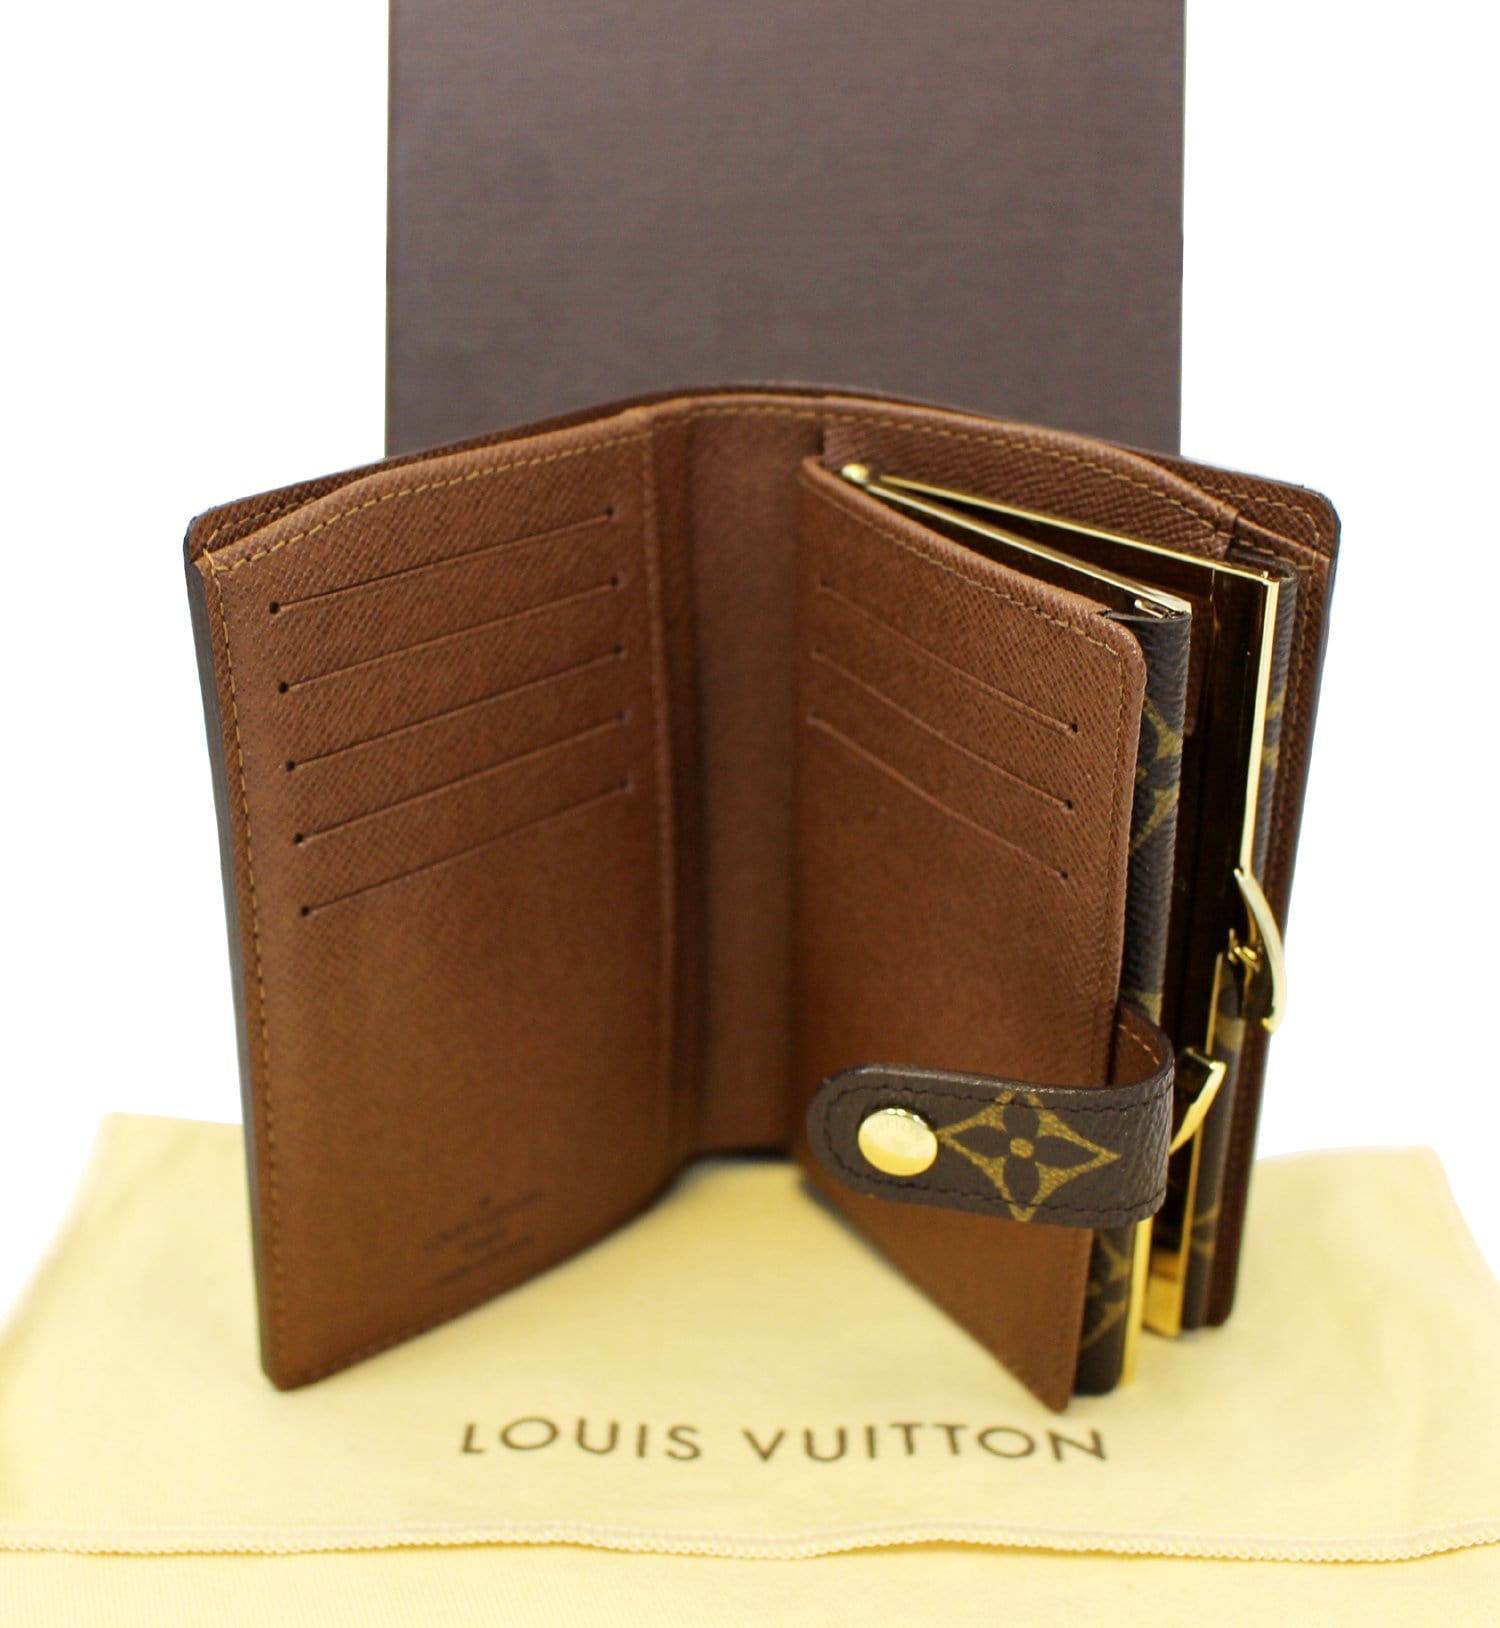 LOUIS VUITTON Monogram Canvas French Wallet Kisslock